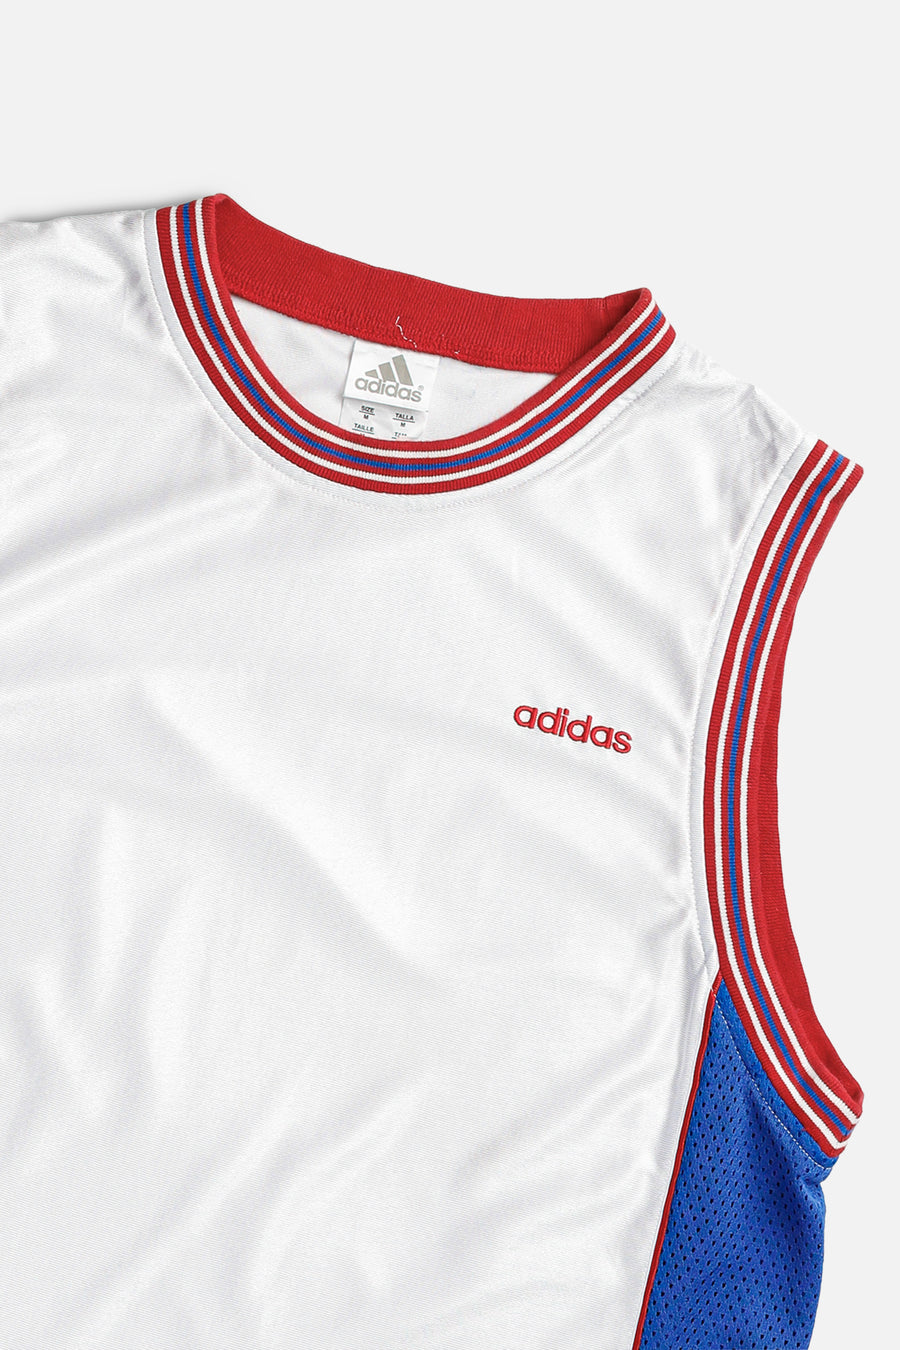 Vintage Adidas Basketball Jersey - M